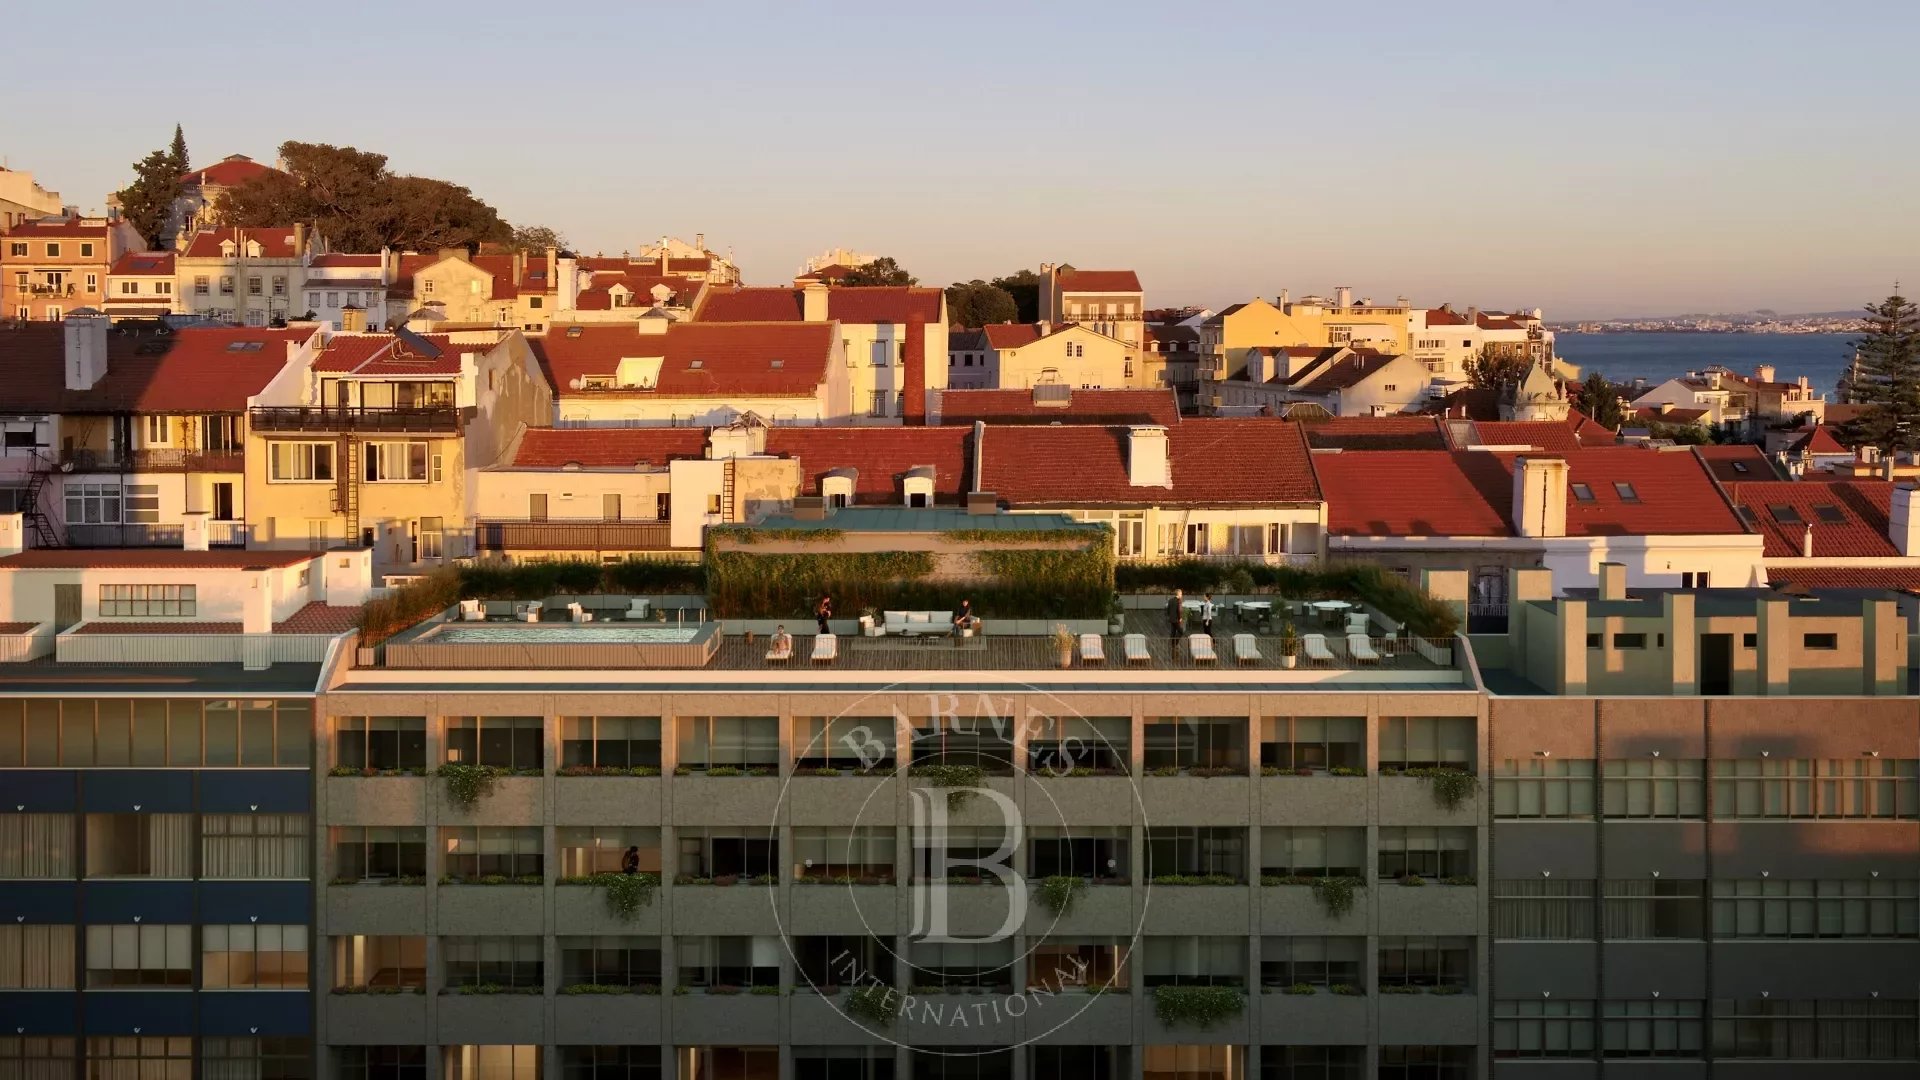 Pied-à-terre in Lisbon